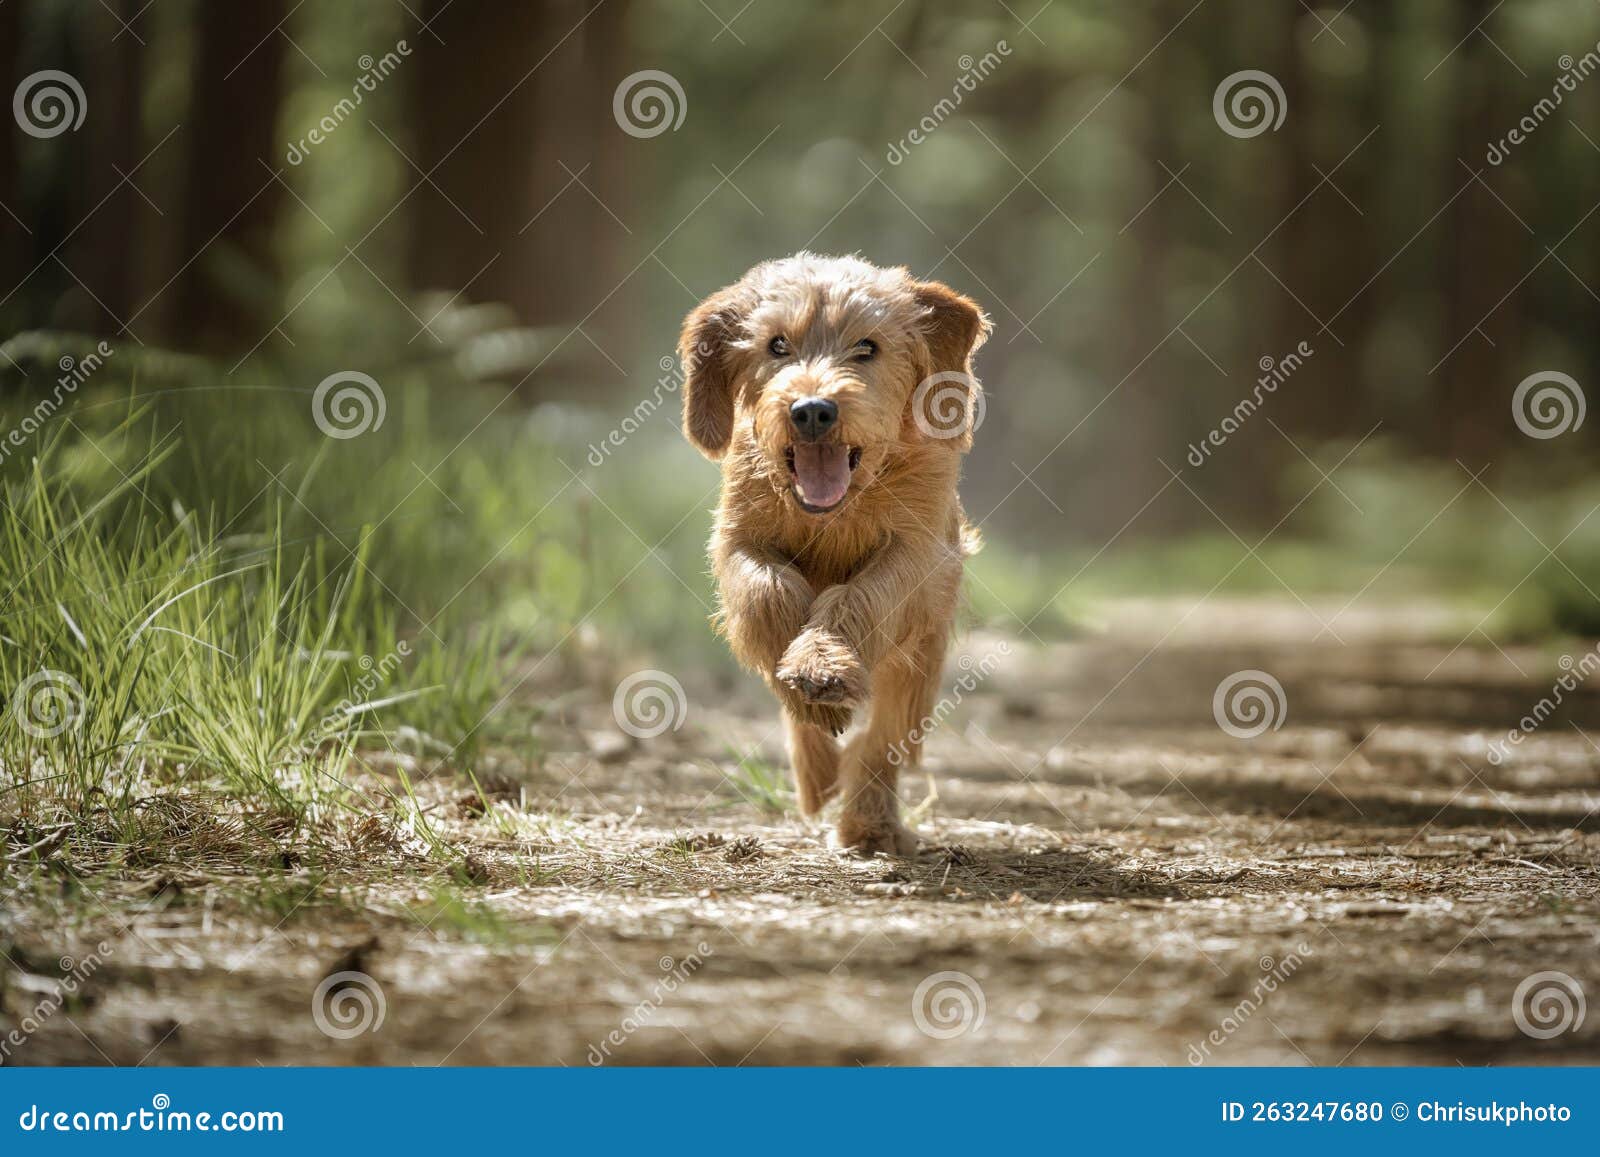 basset fauve de bretagne dog running directly at the camera